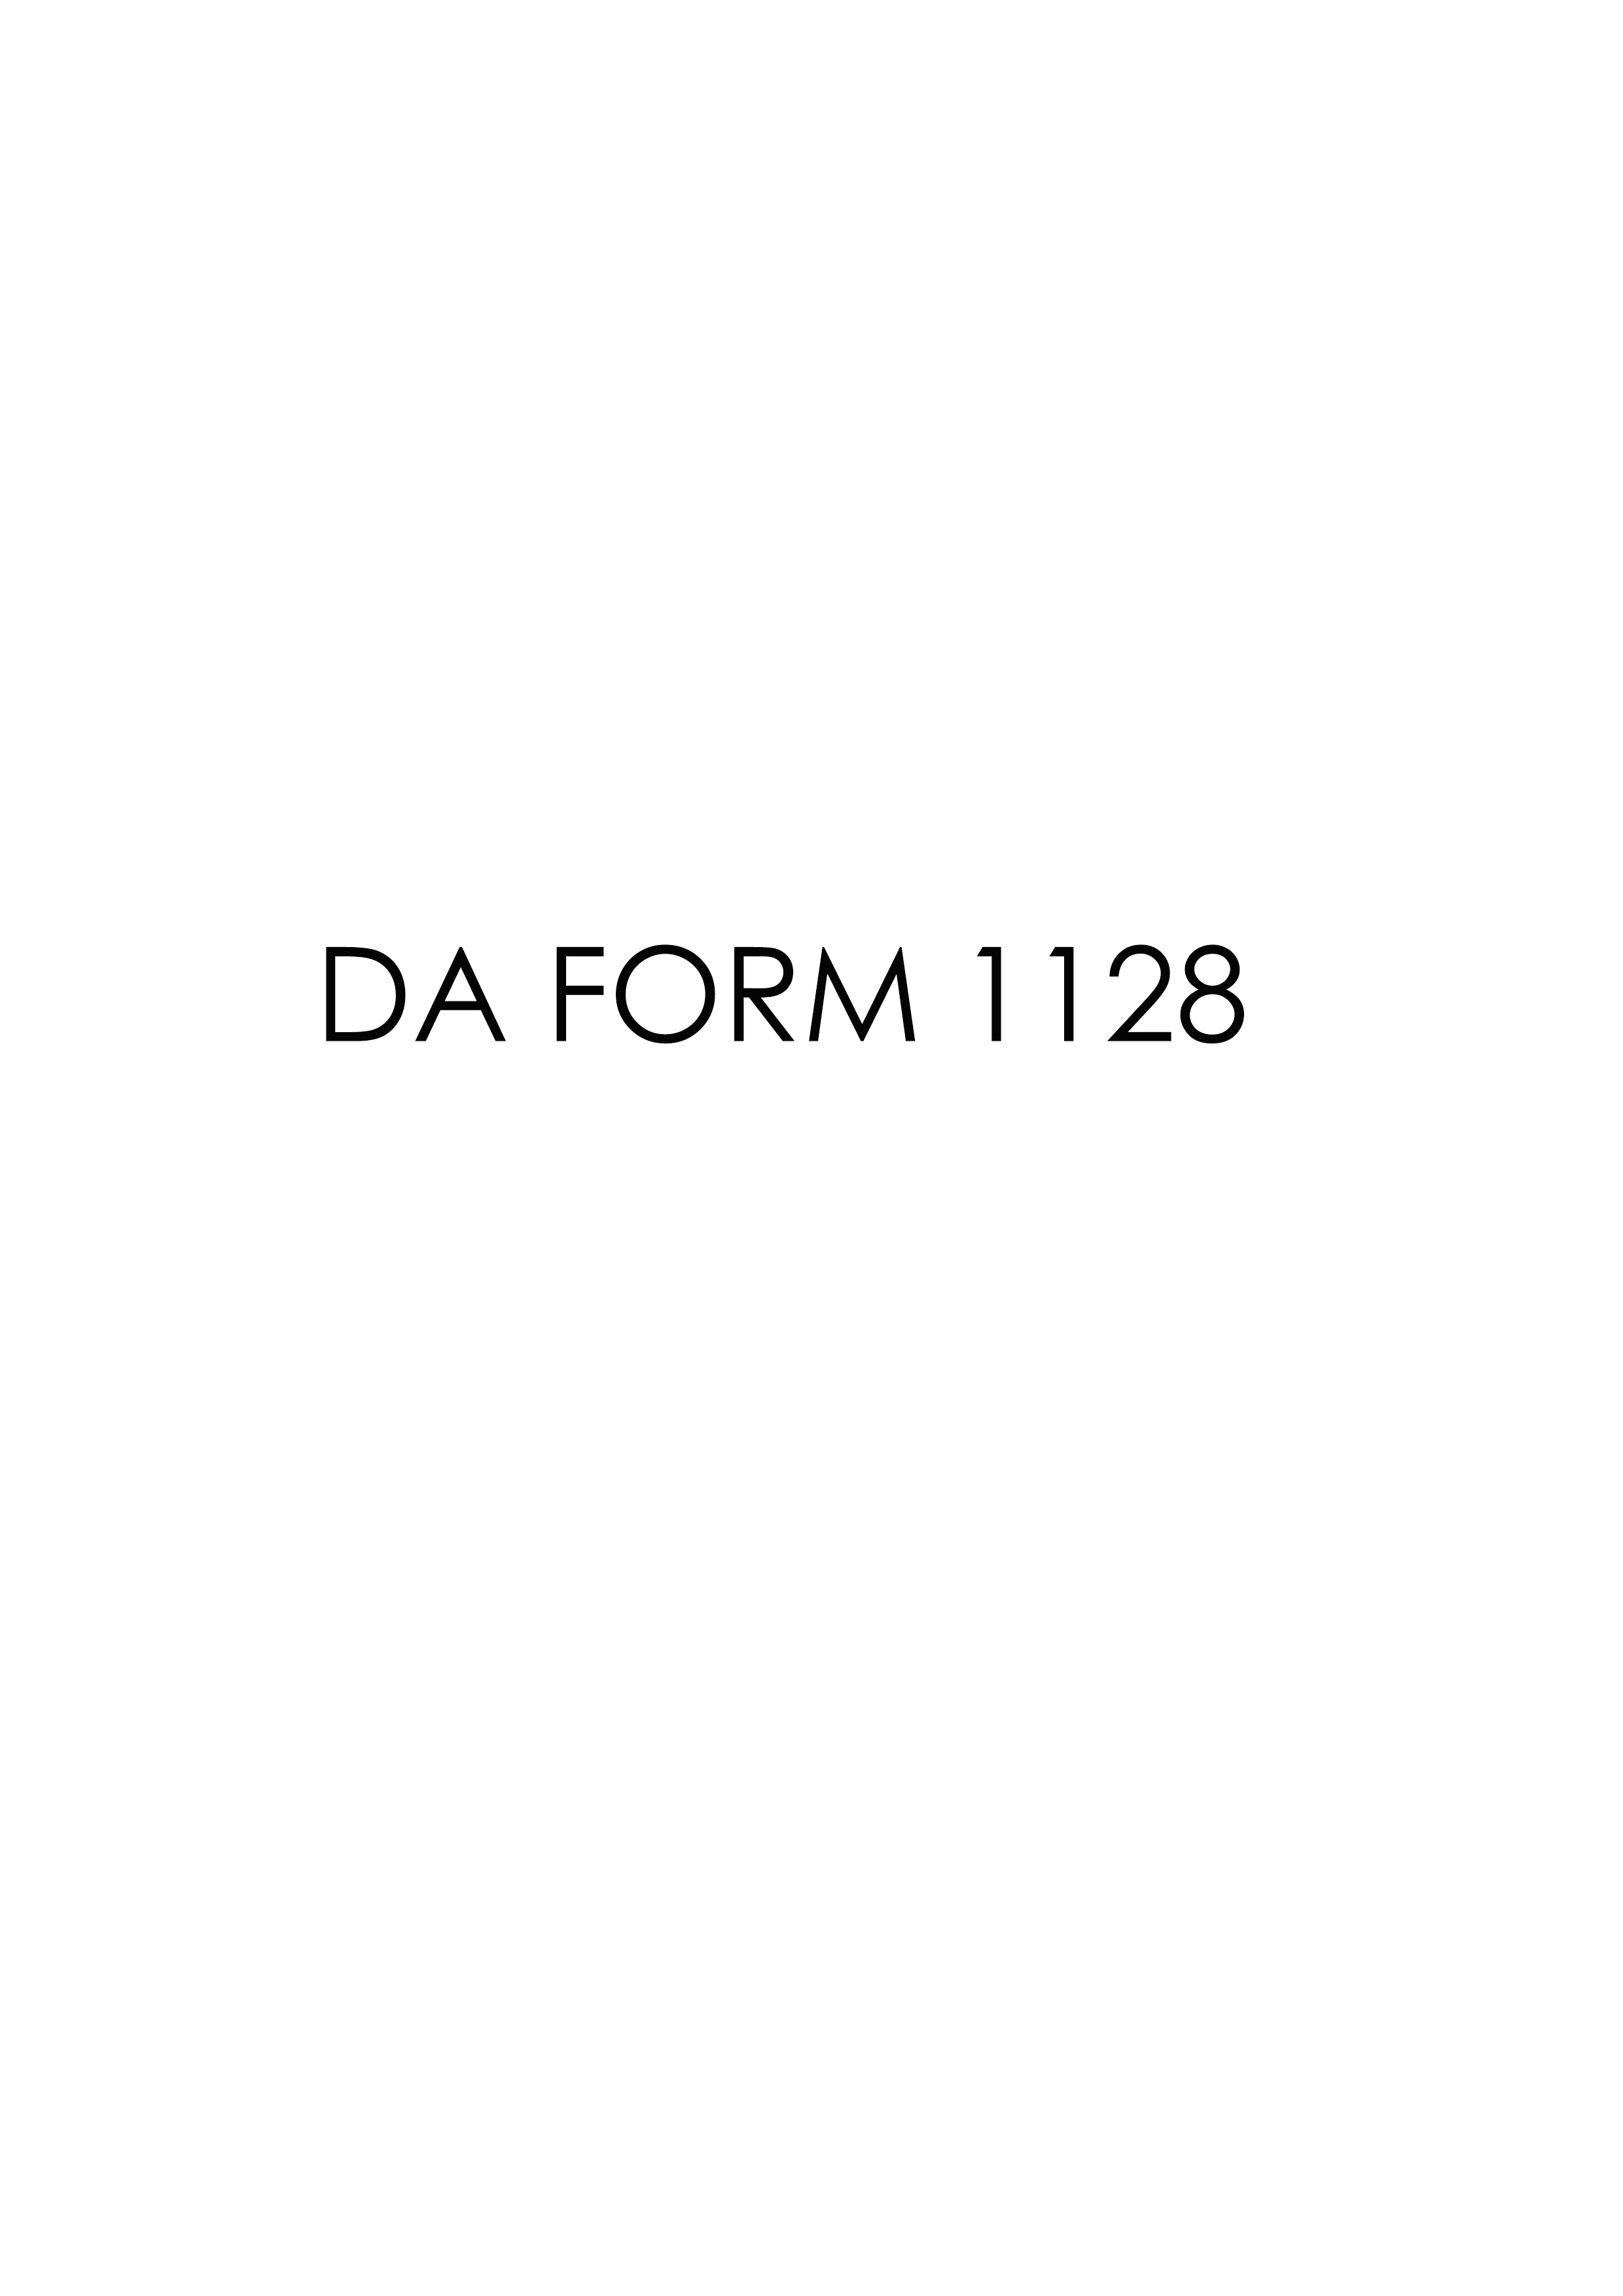 Download da 1128 Form